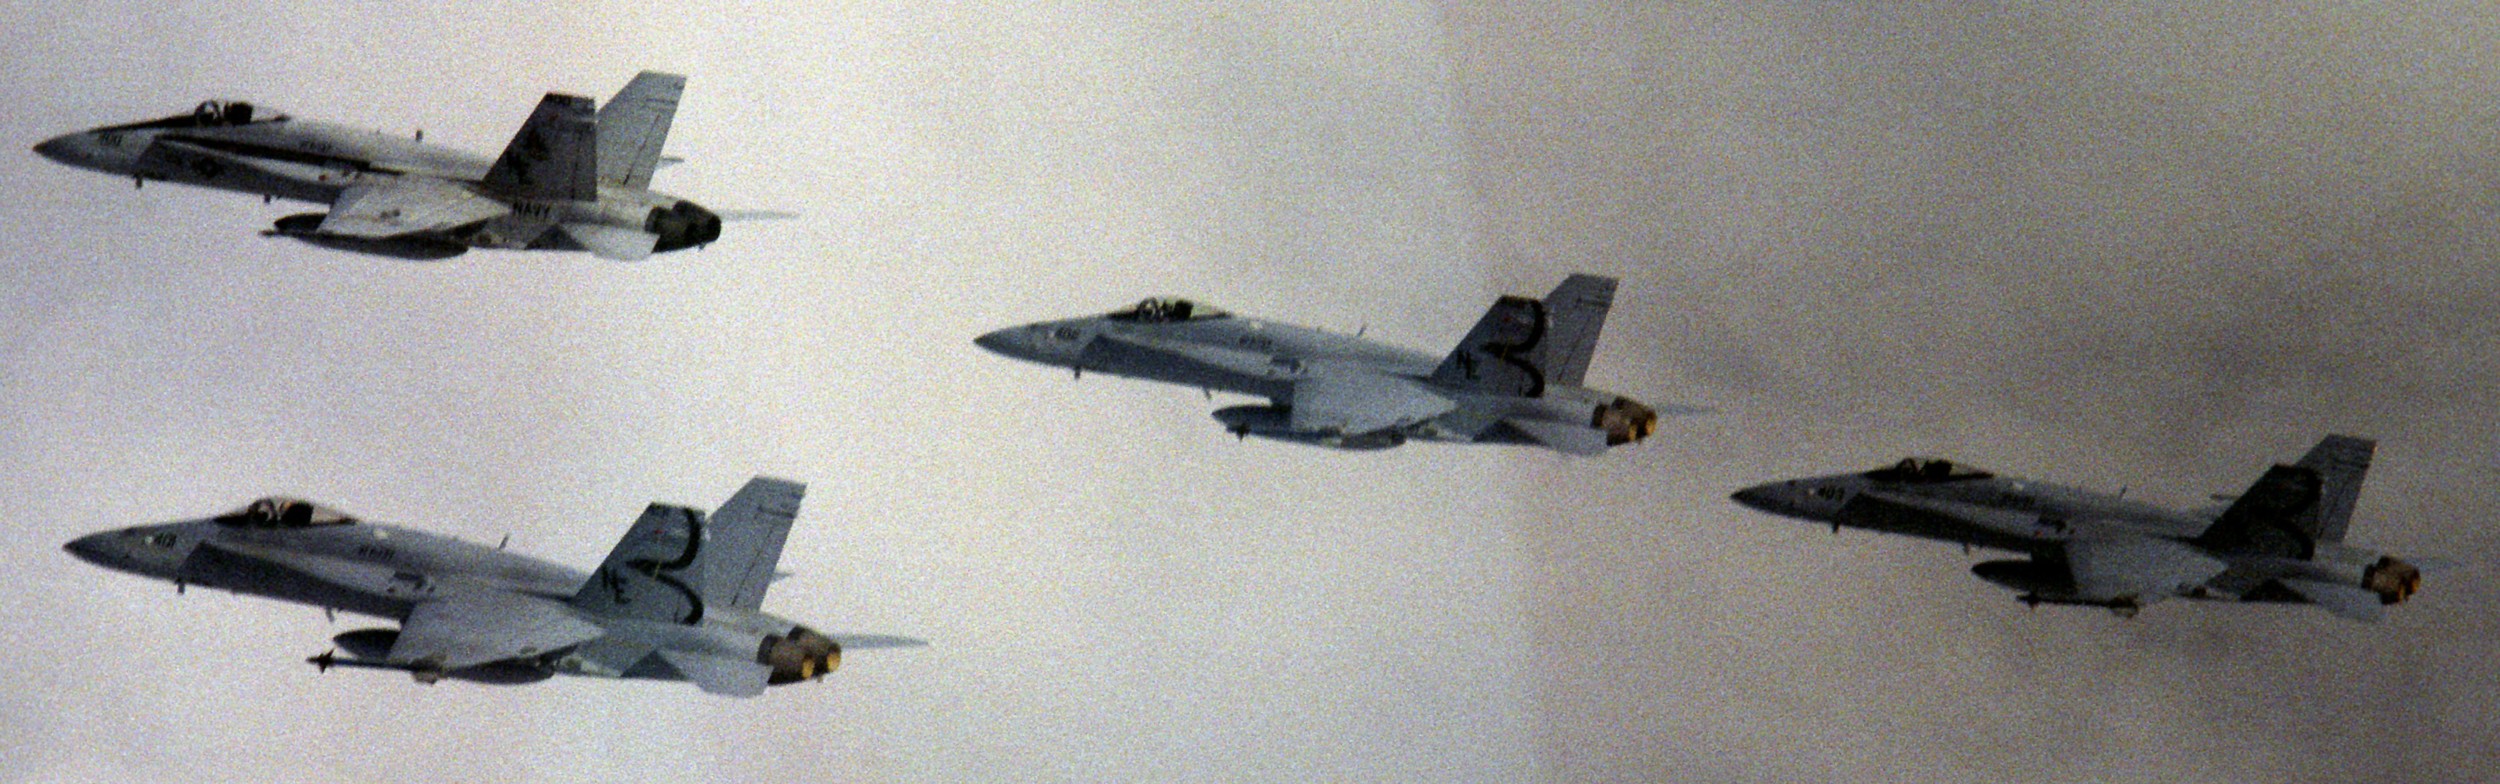 vfa-137 kestrels strike fighter squadron f/a-18c hornet cvw-2 1996 77